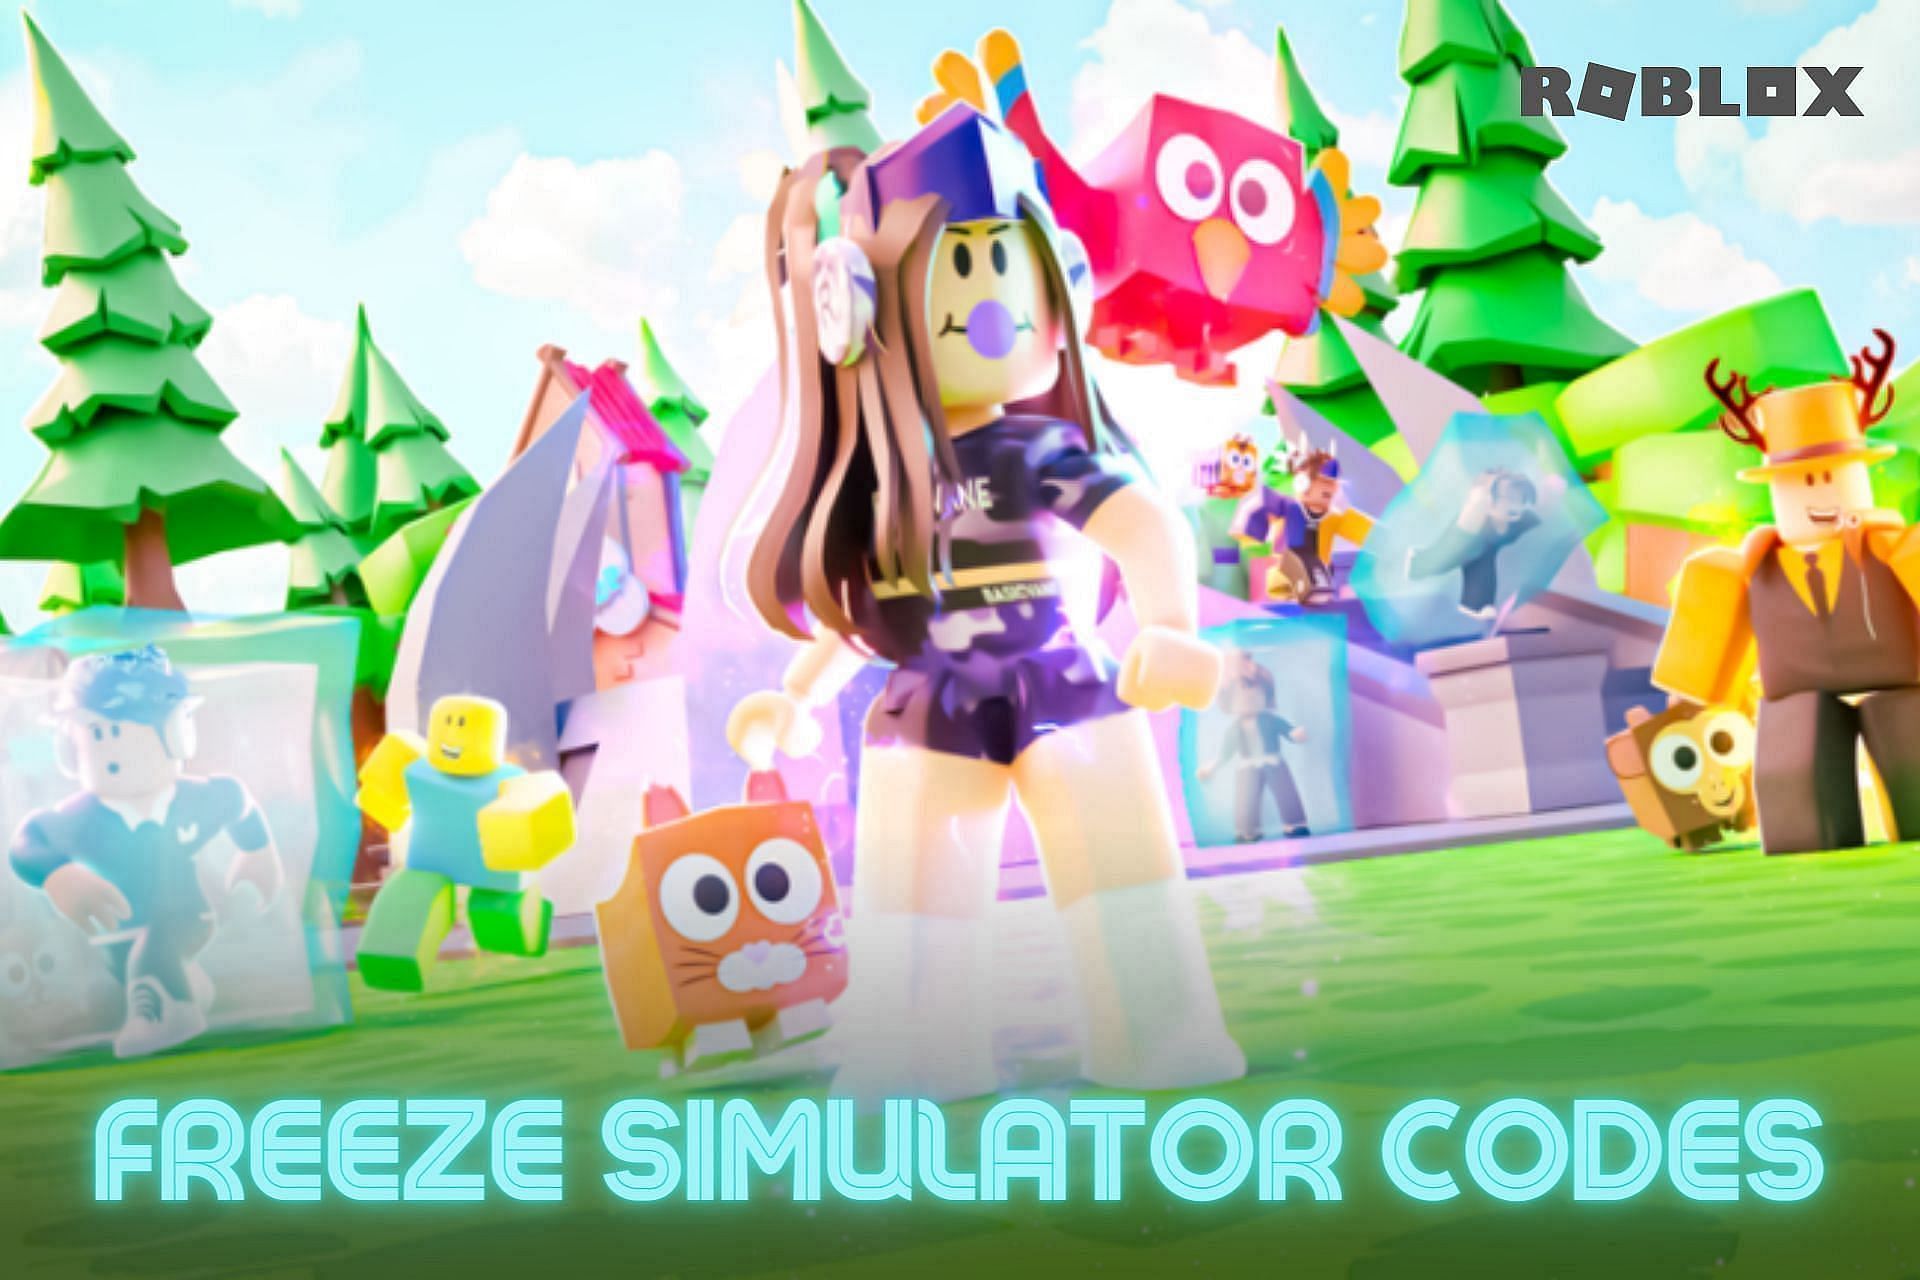 Freeze Simulator codes (Image via Sportskeeda)